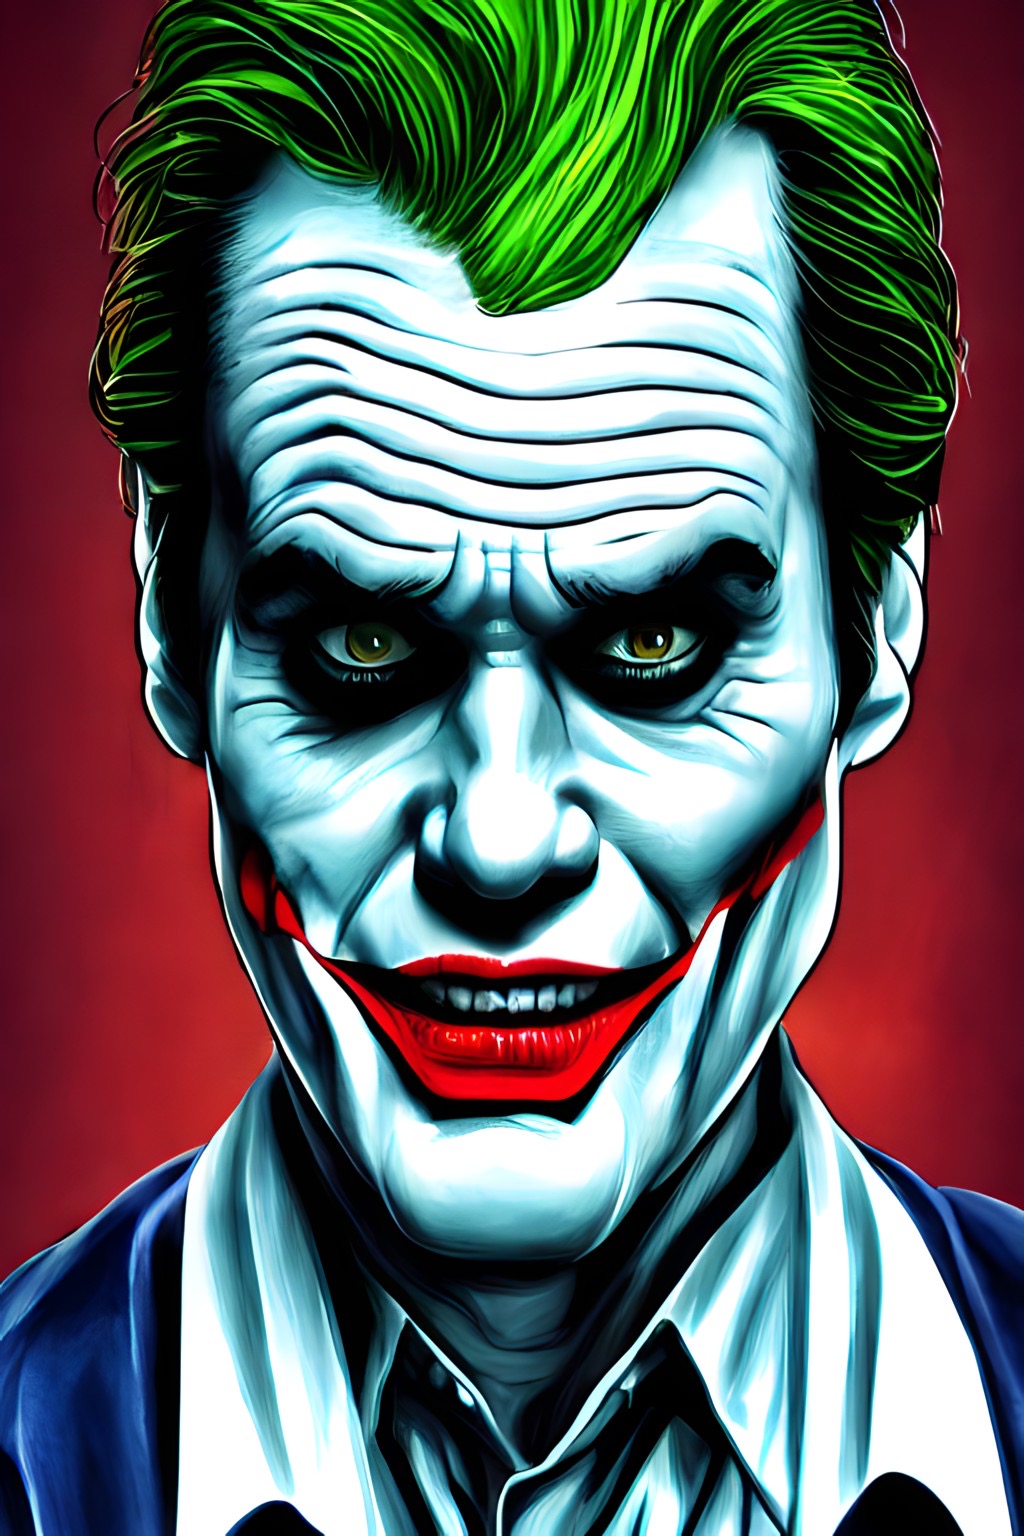 Jim Carrey as The Joker by Jessafer on DeviantArt